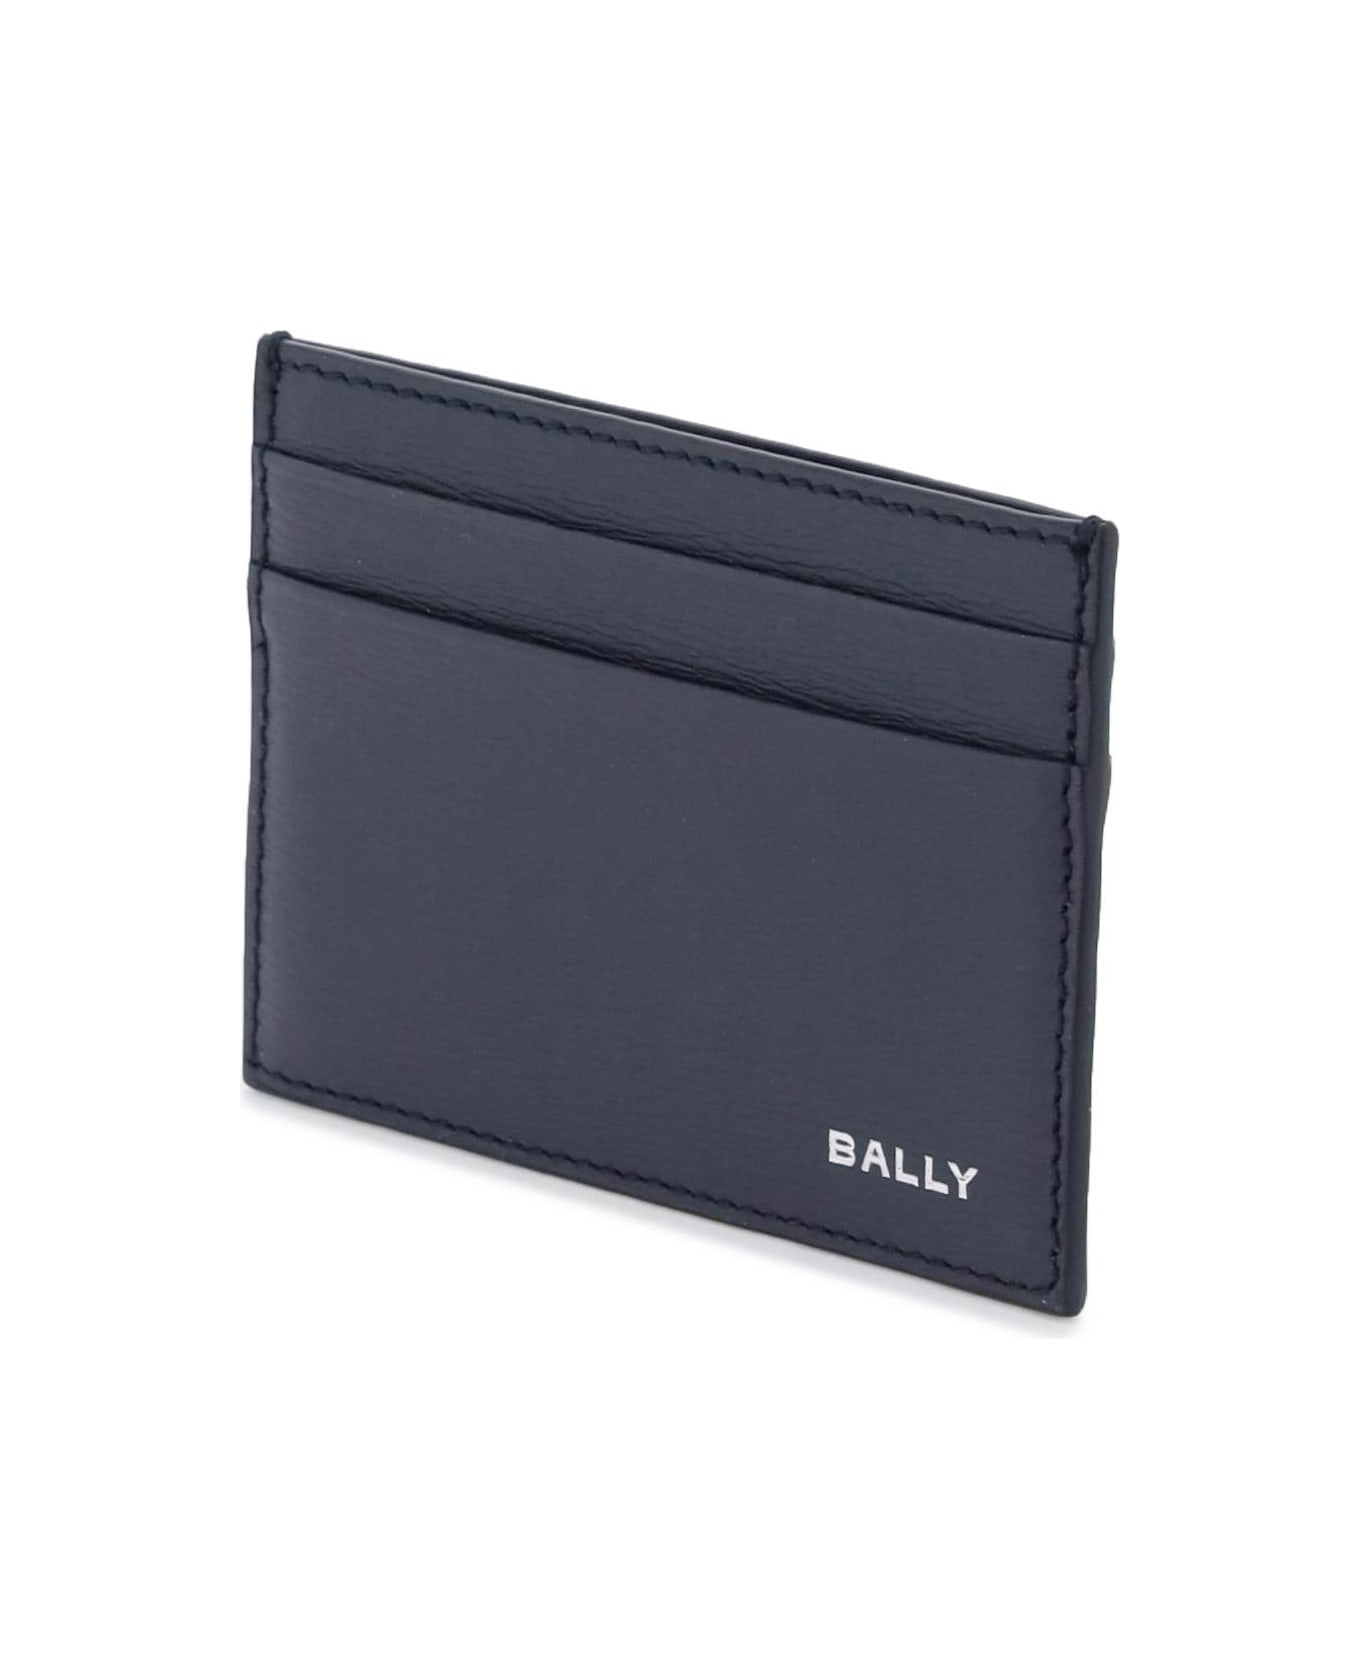 Bally Leather Crossing Cardholder - MIDNIGHT21 PALLADIO (Blue)